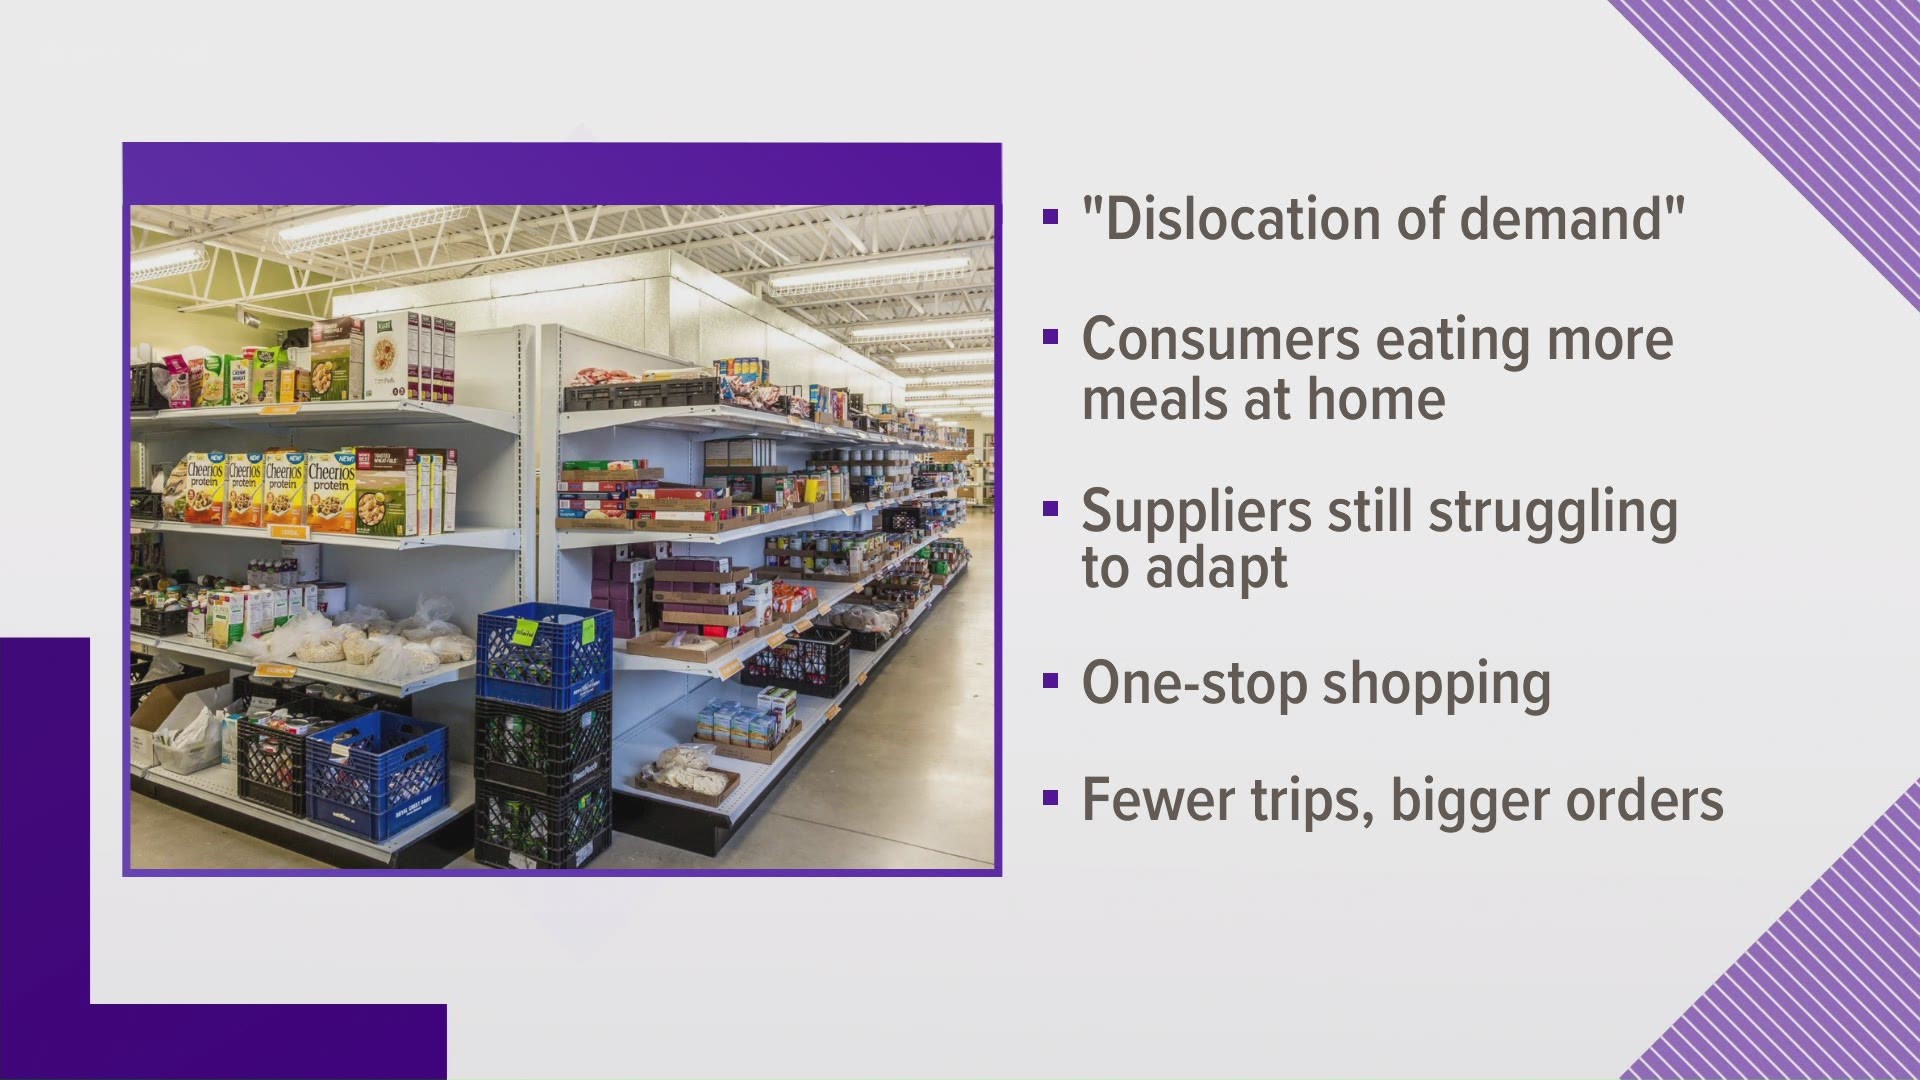 A professor at CSU said supply lines are still adjusting to changing consumer behavior.